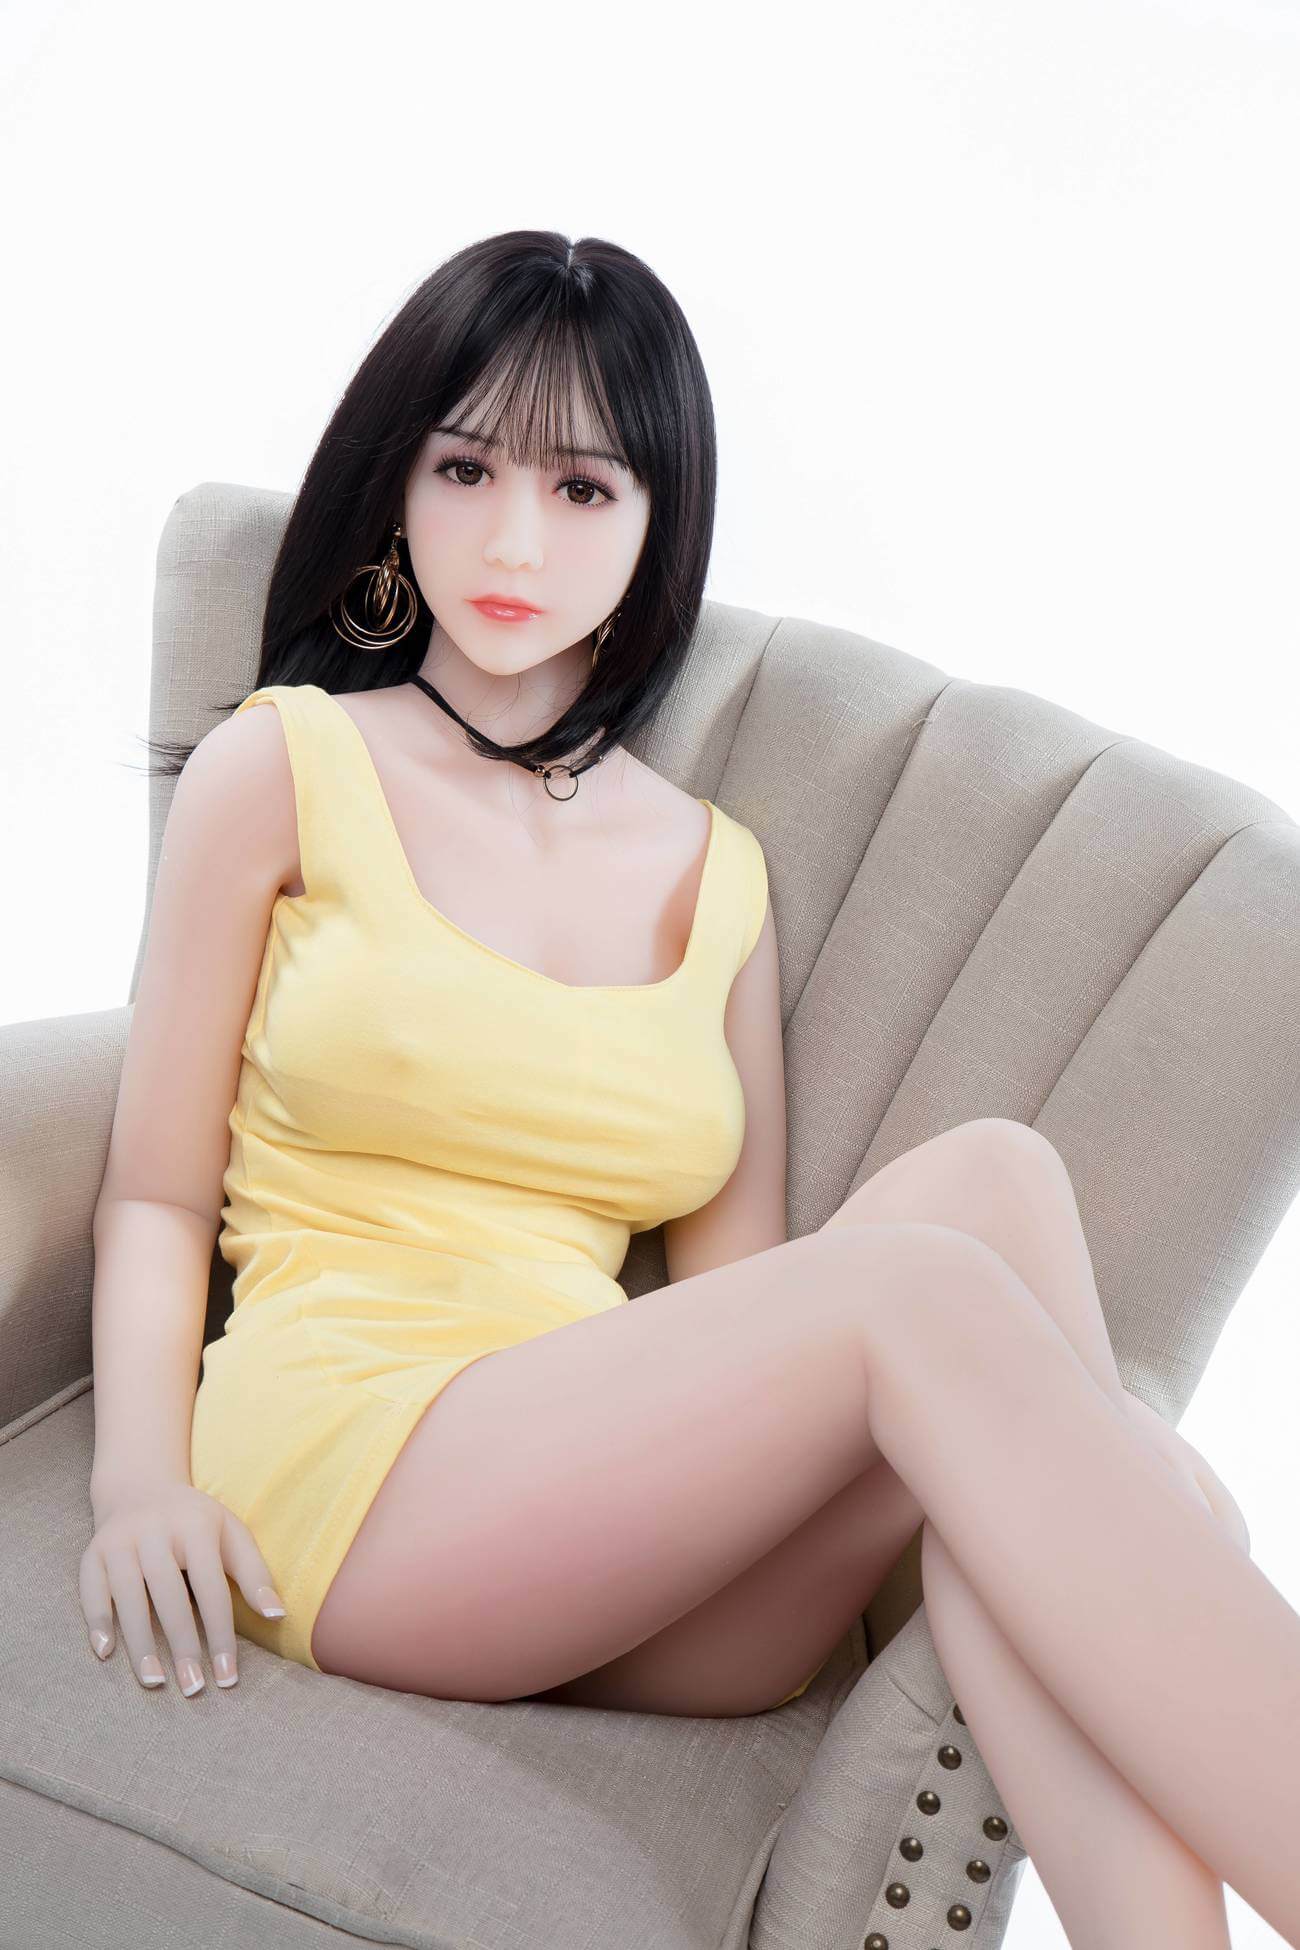 Japanese Life Size Sex Dolls – Lee 16